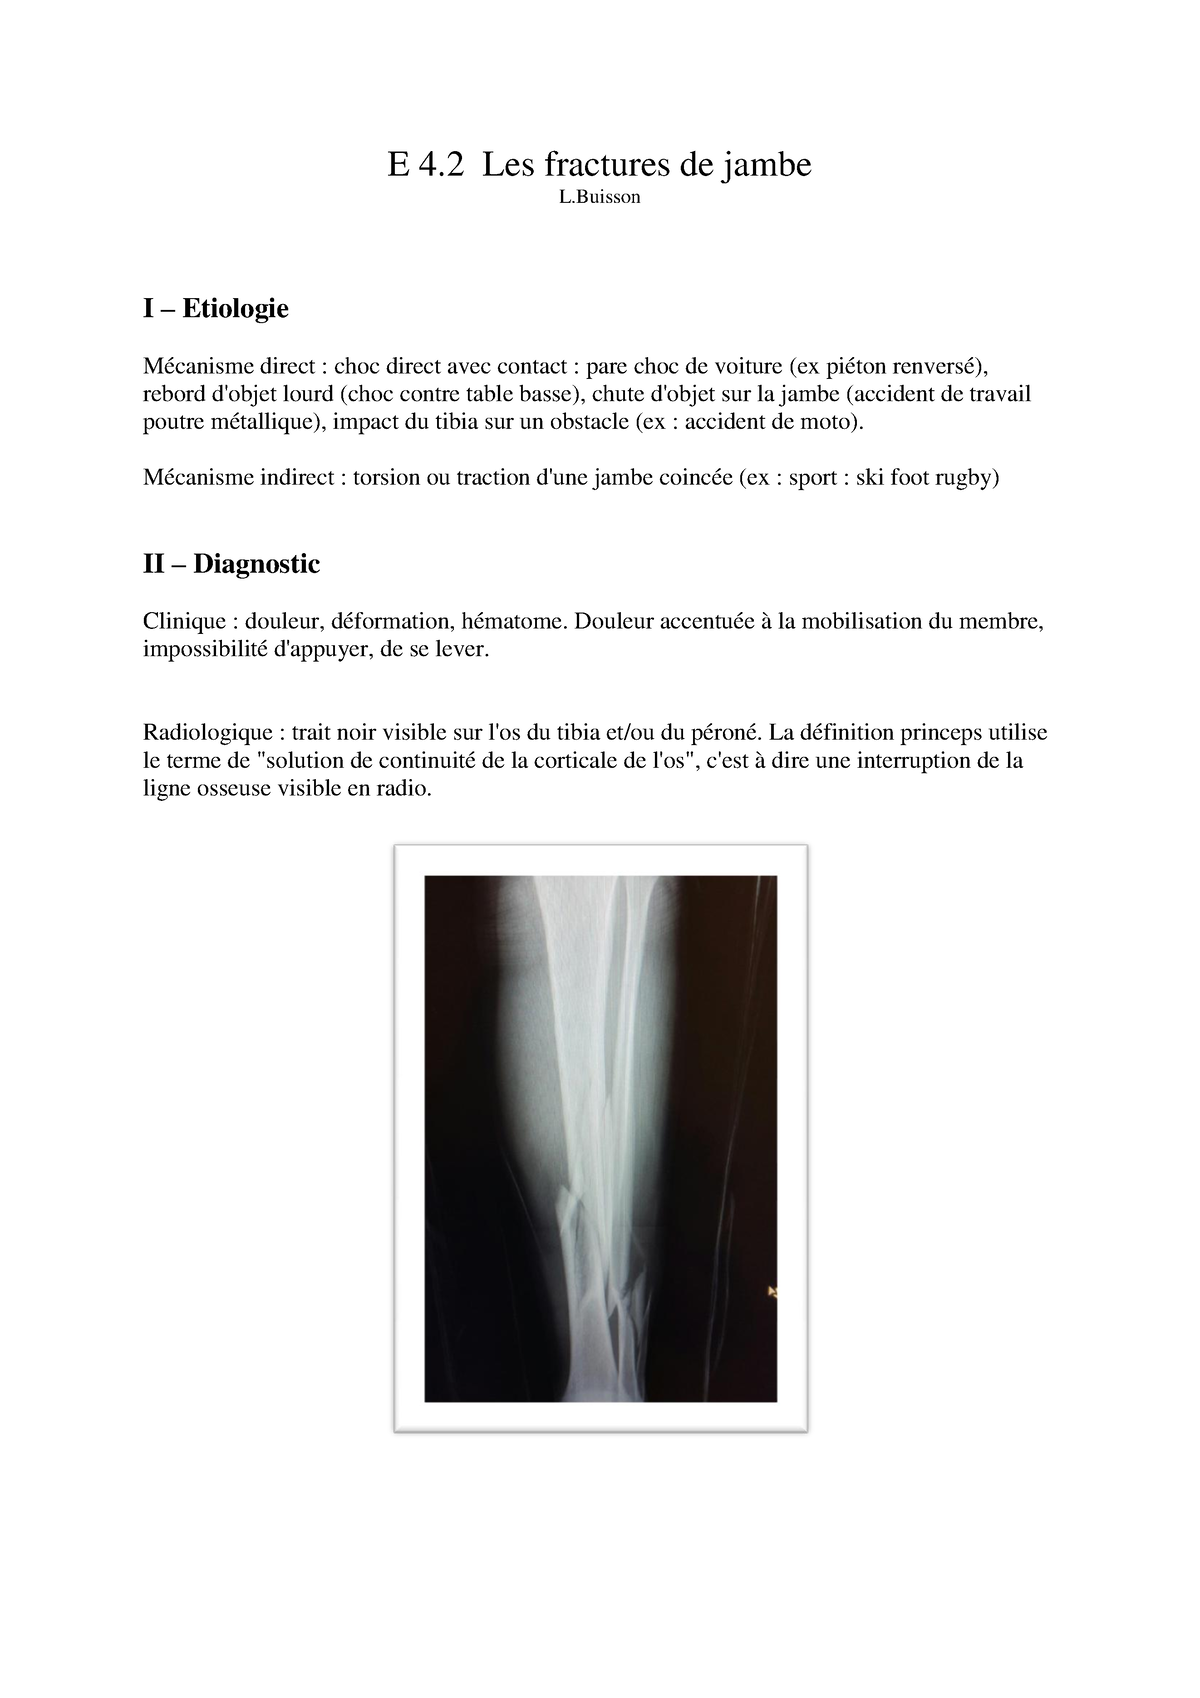 Fractures-de-jambe - bien - E 4 Les fractures de jambe L I ...